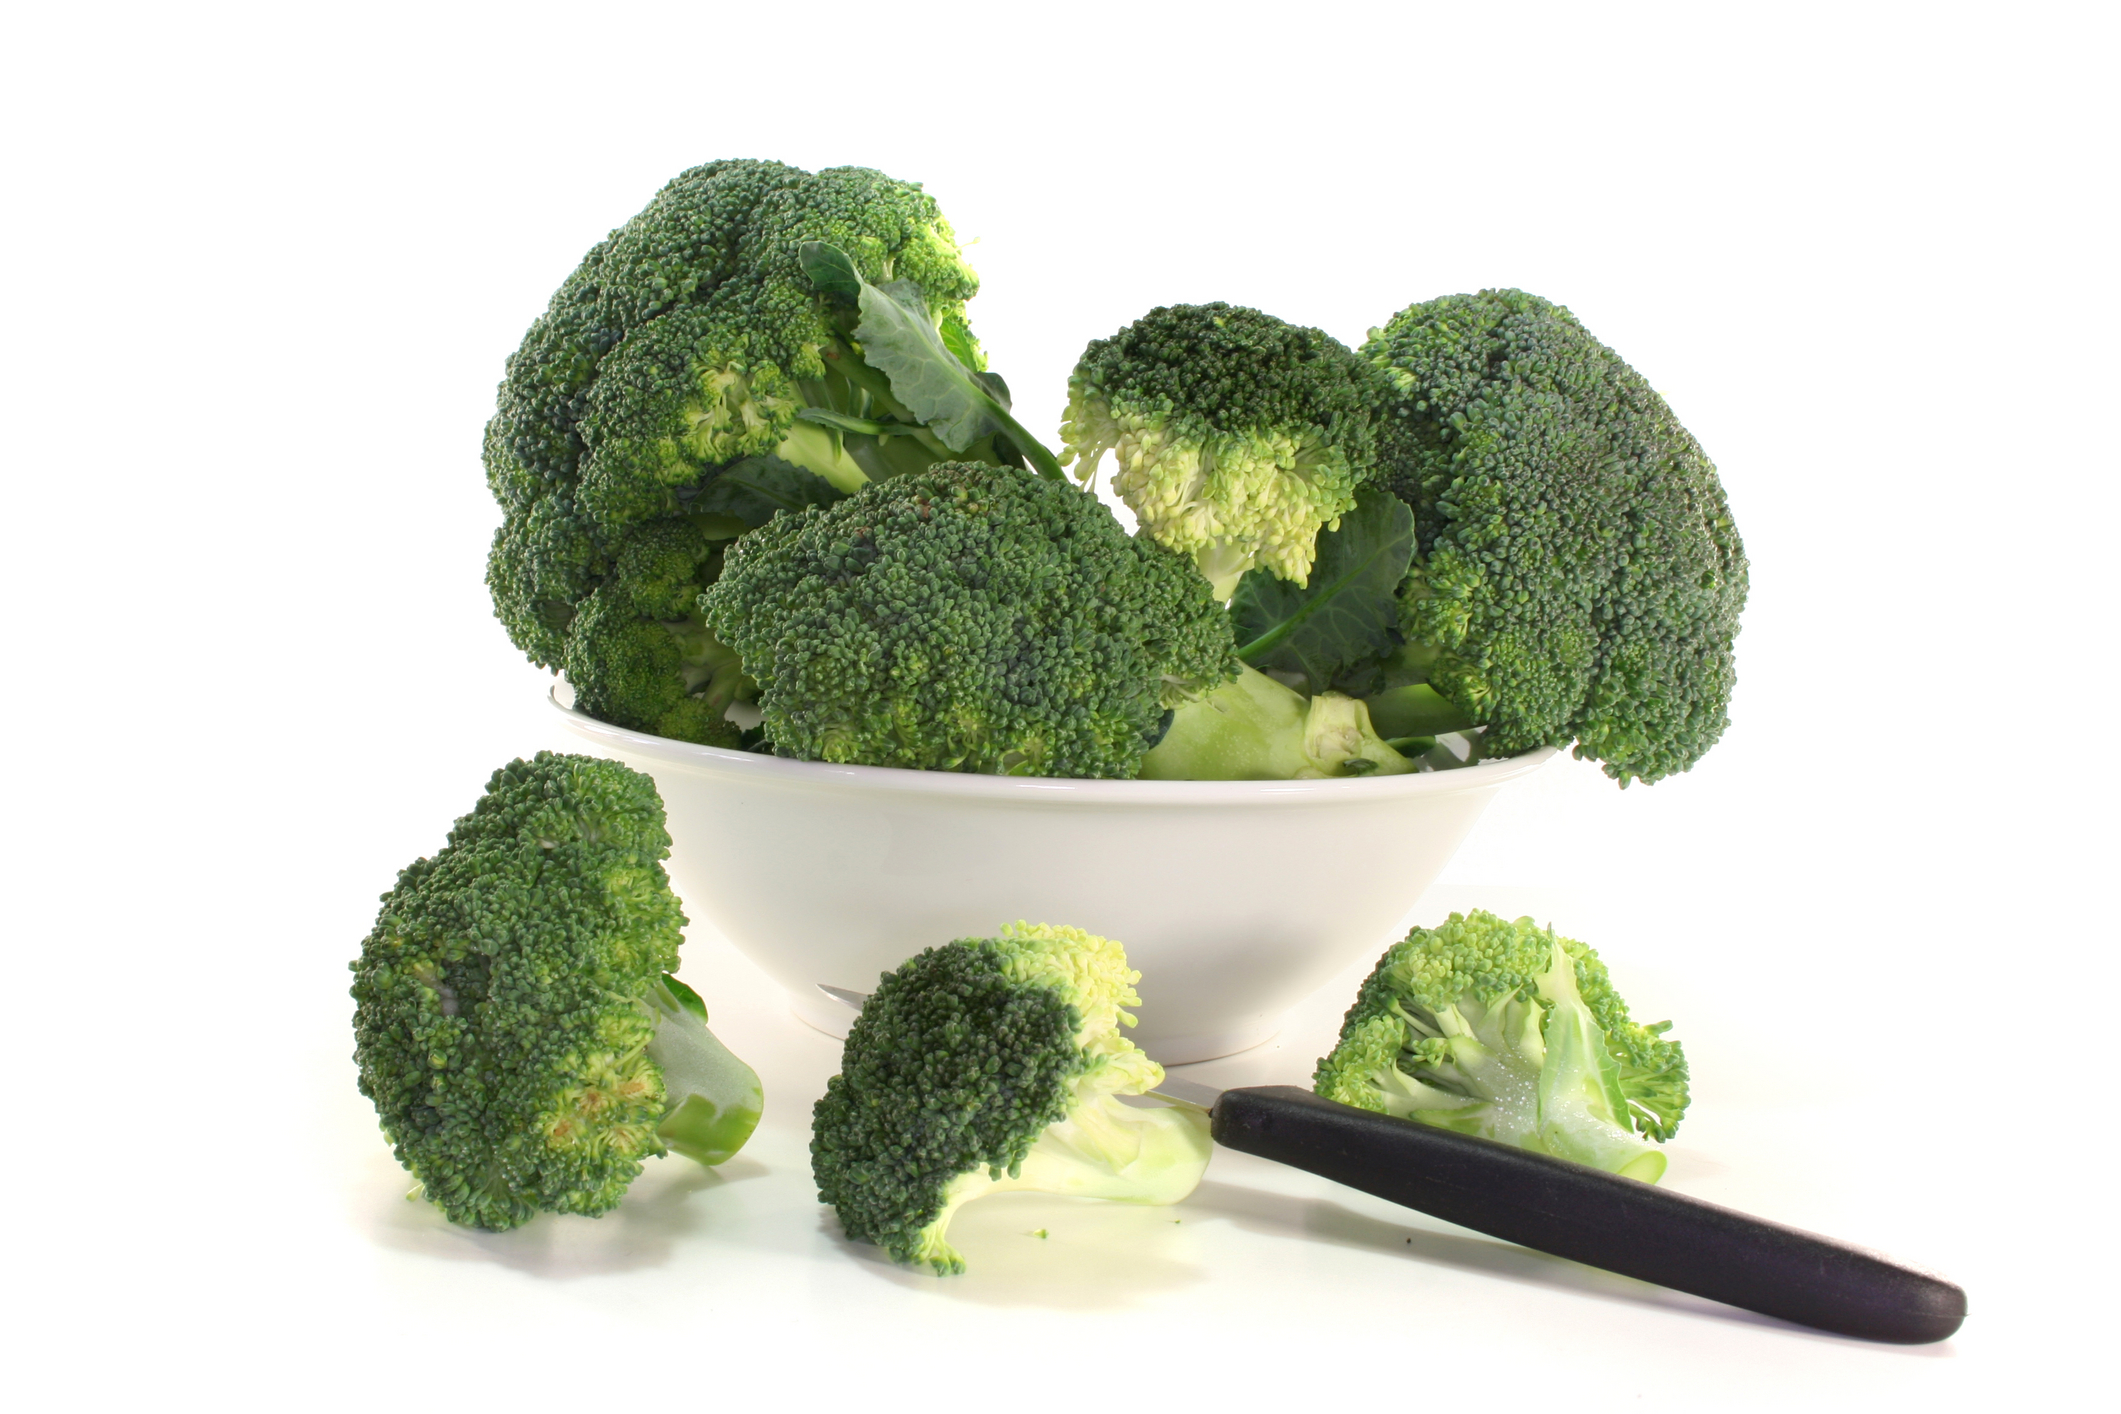 Benefits of Broccoli: Sulforaphane and Your Health